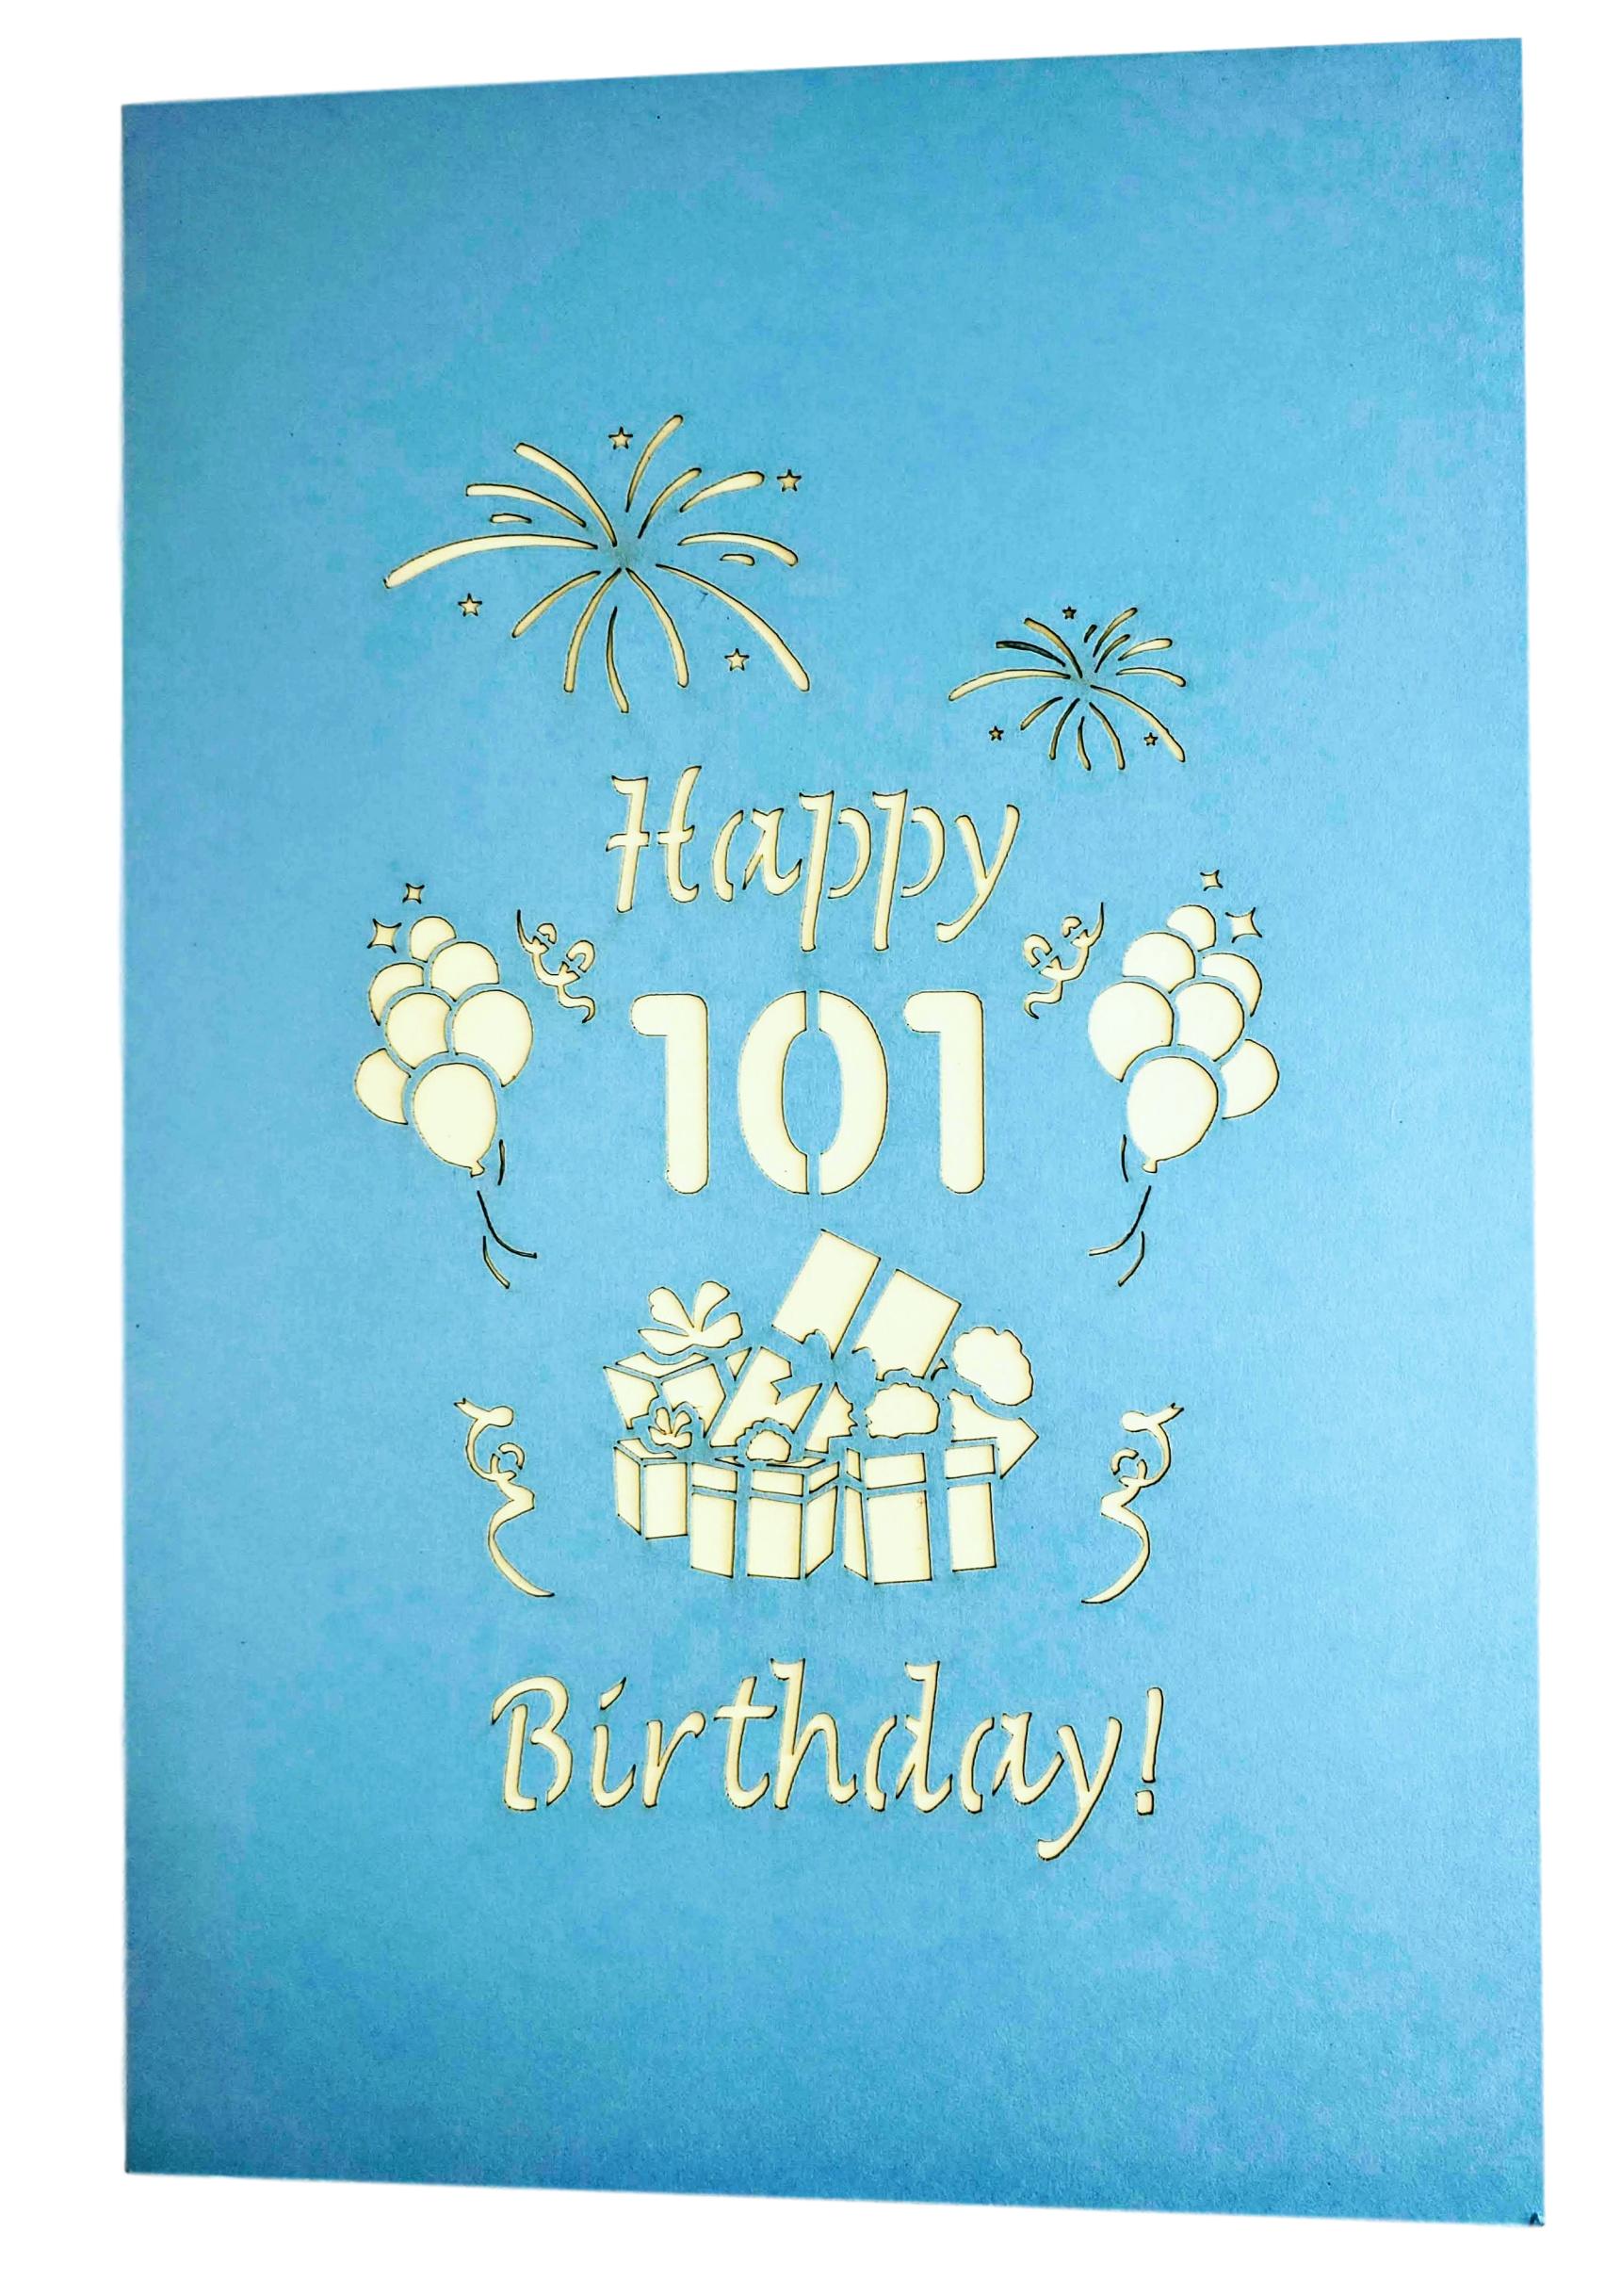 631 101 Birthday Images, Stock Photos & Vectors | Shutterstock